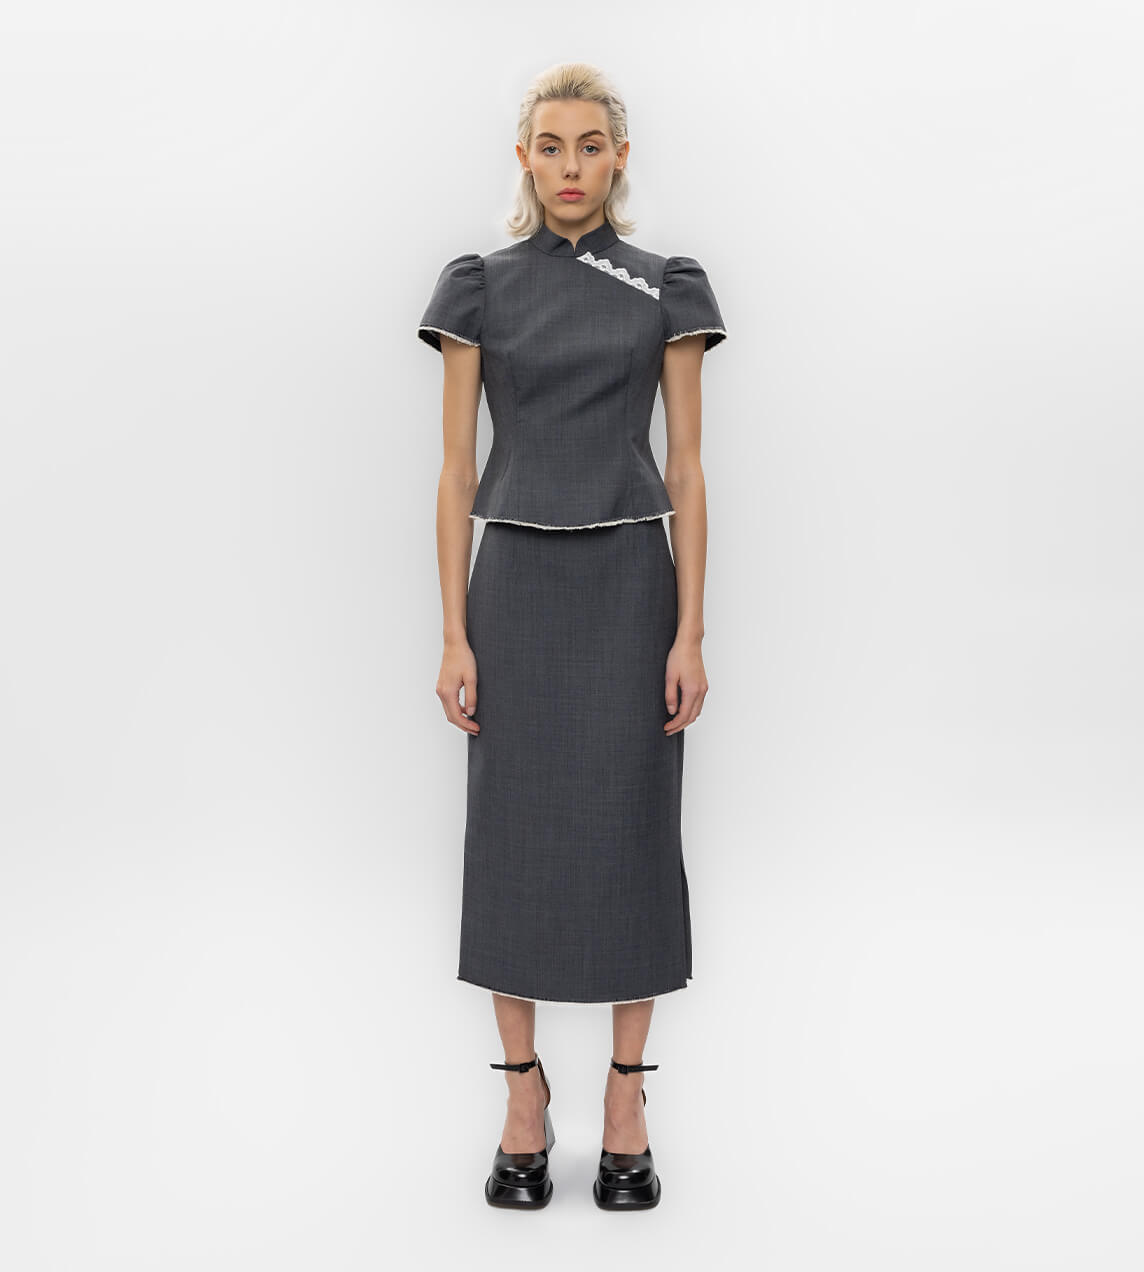 ShuShu/Tong - Pencil Skirt Grey